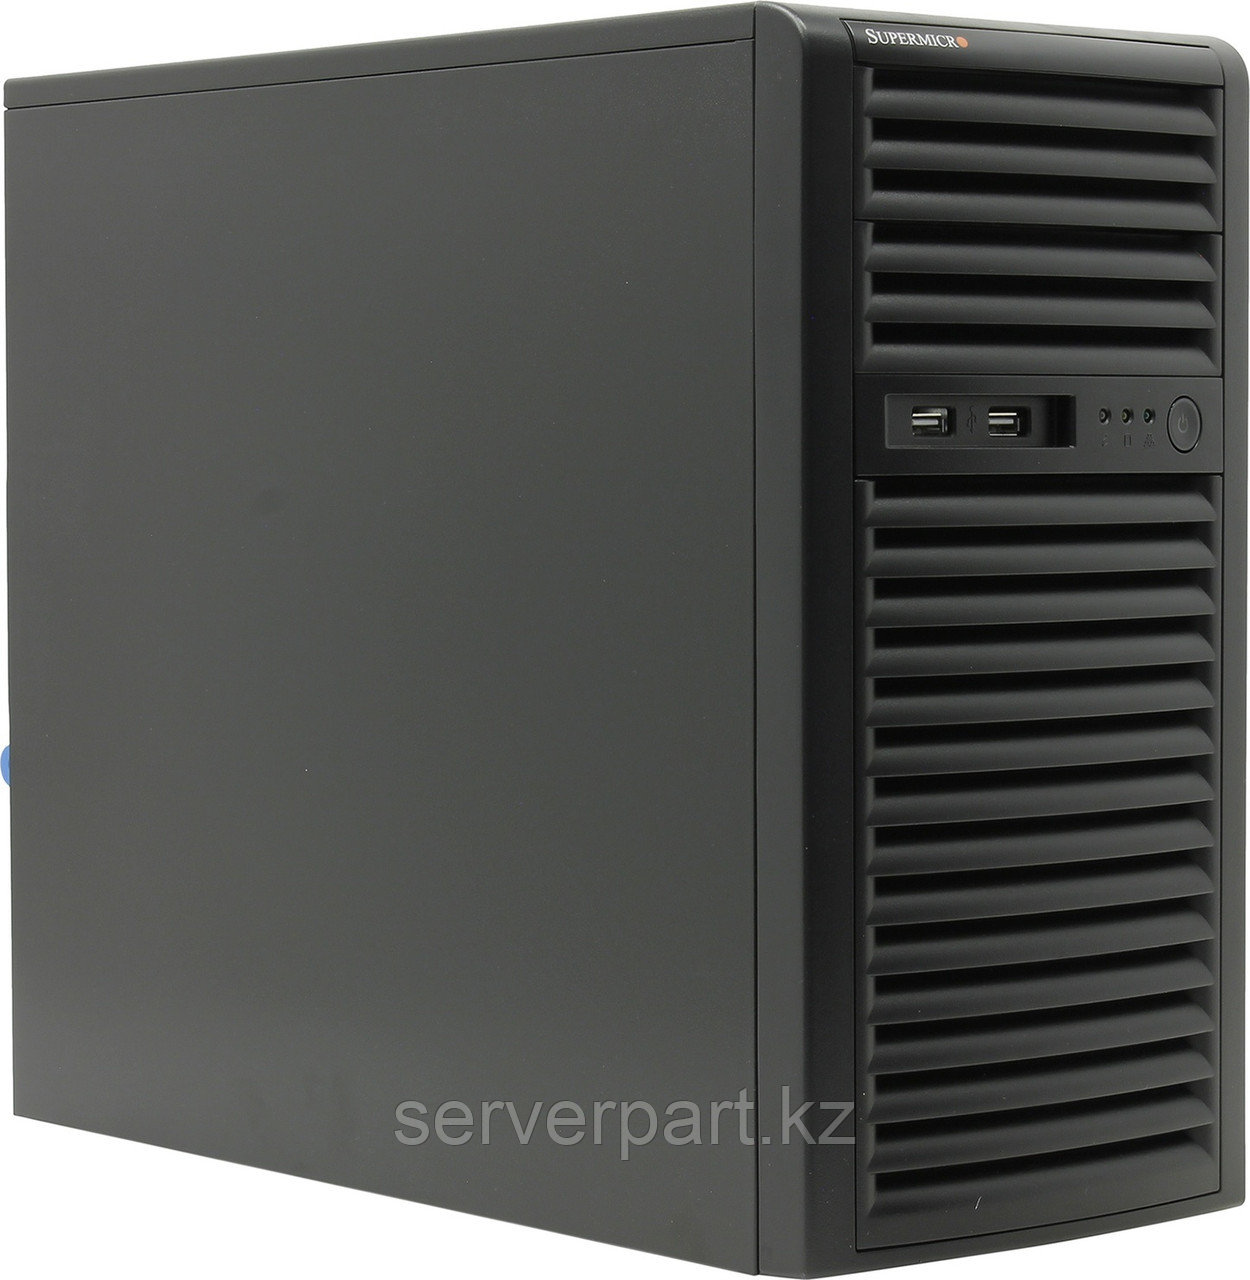 Сервер Supermicro SYS-5039D Tower/4-core intel xeon E3-1220v6 3GHz/48GB EUDIMM/1x960GB SSD RI Hyb